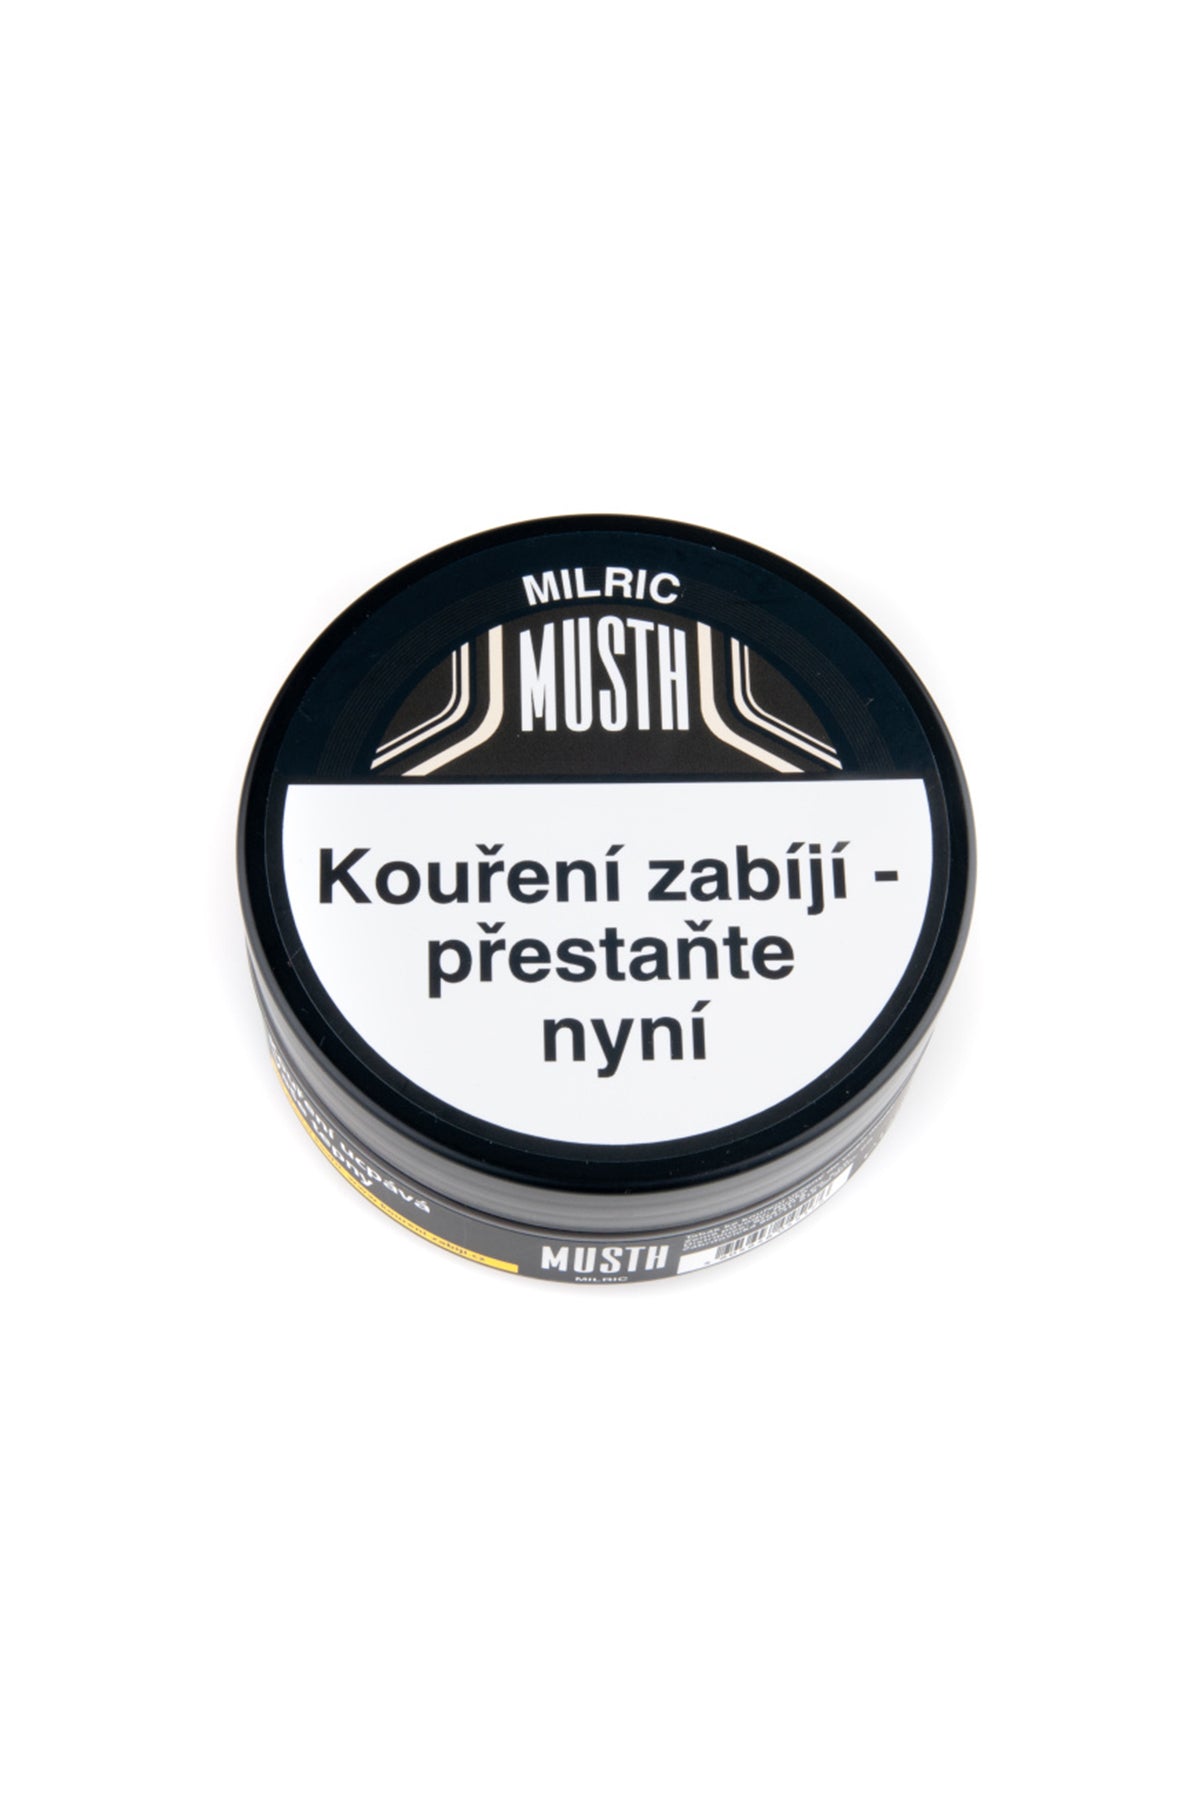 Tabák - MustH 125g - Milric